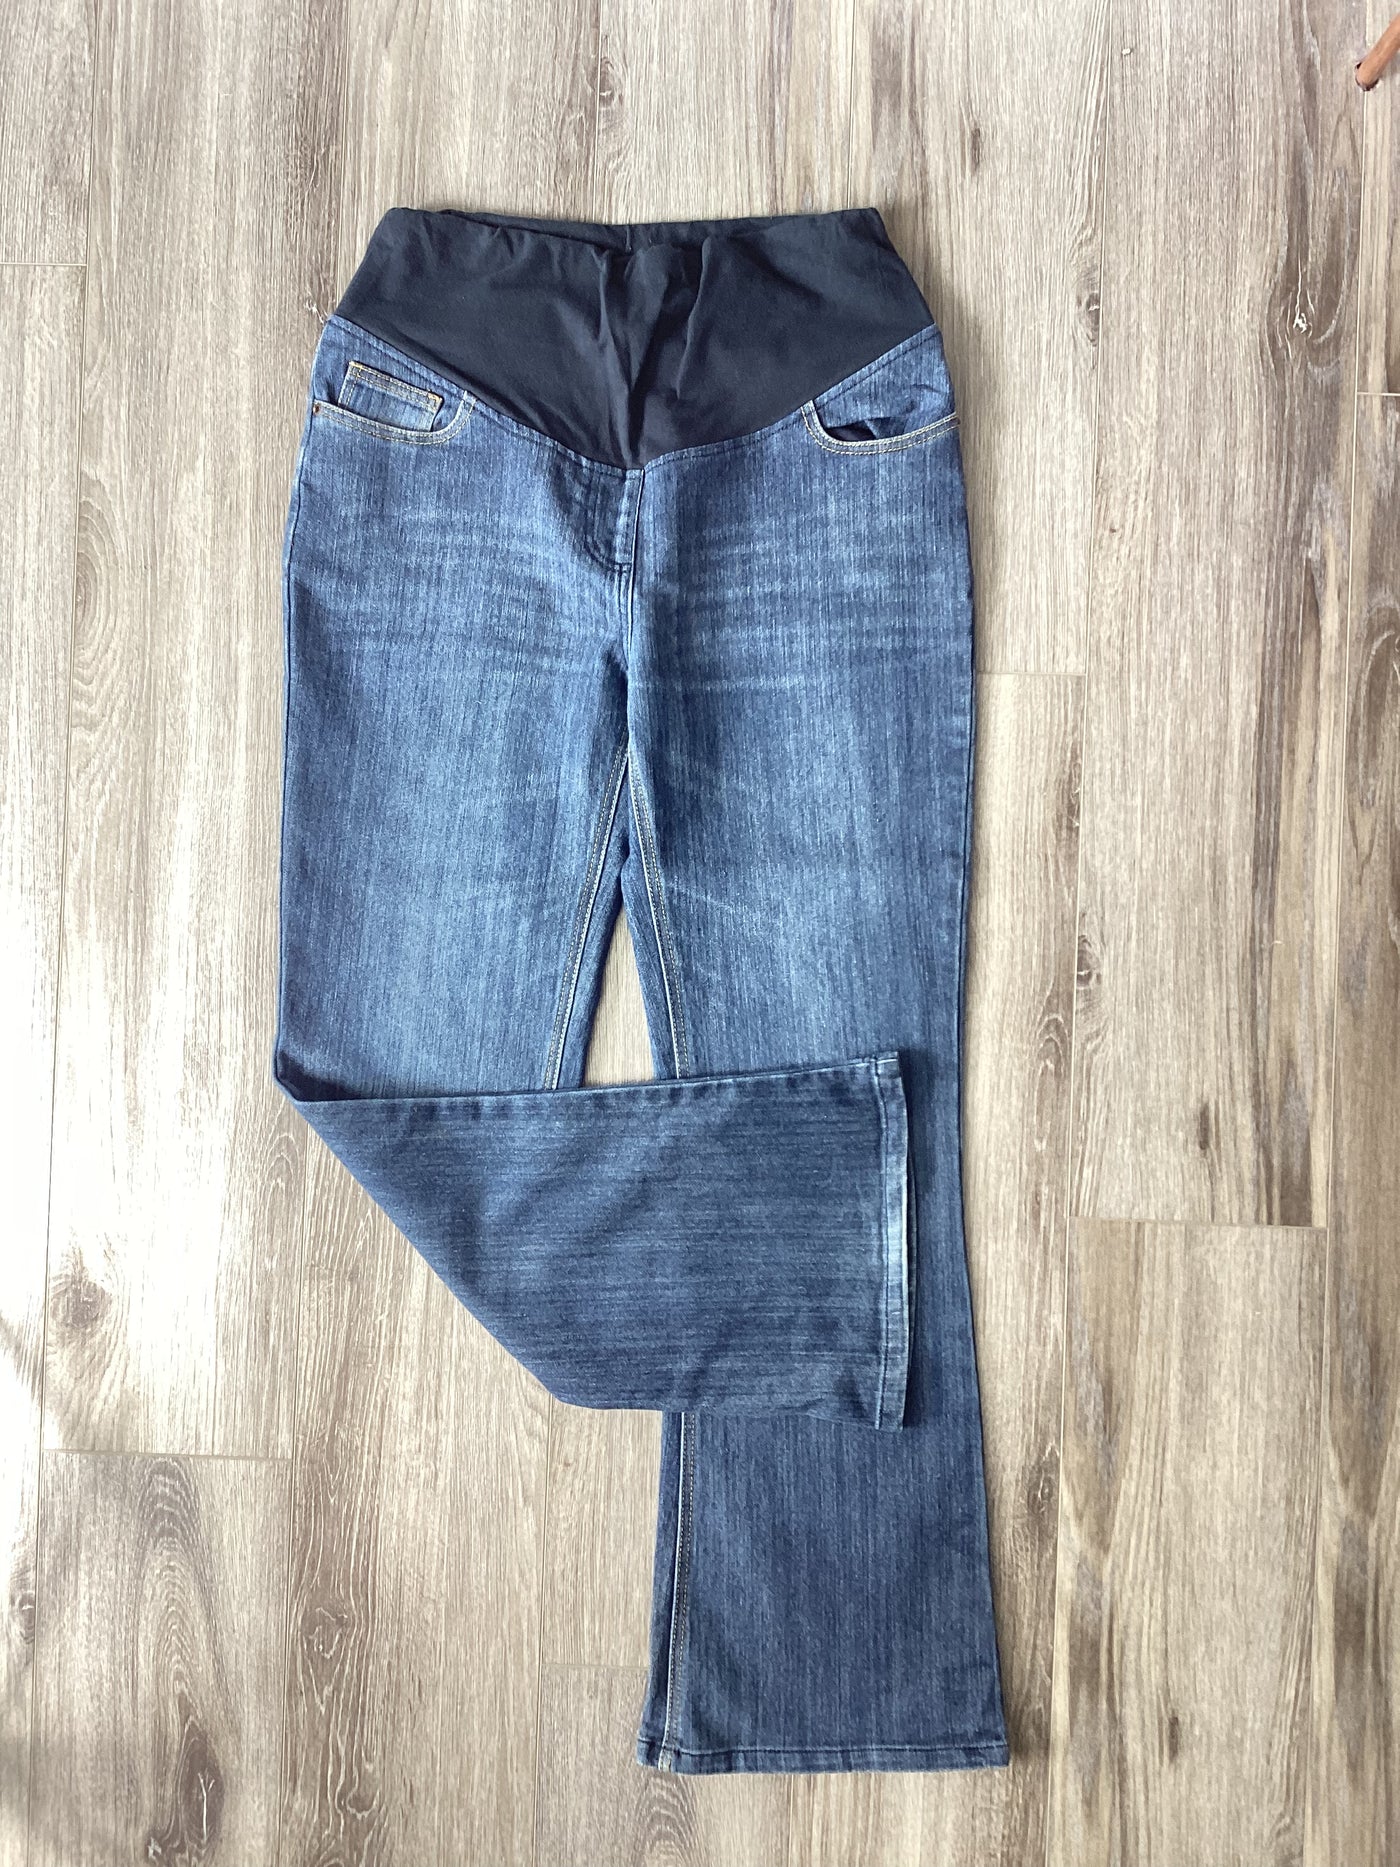 Jojo Maman Bebe blue overbump bootcut jeans - Size 10